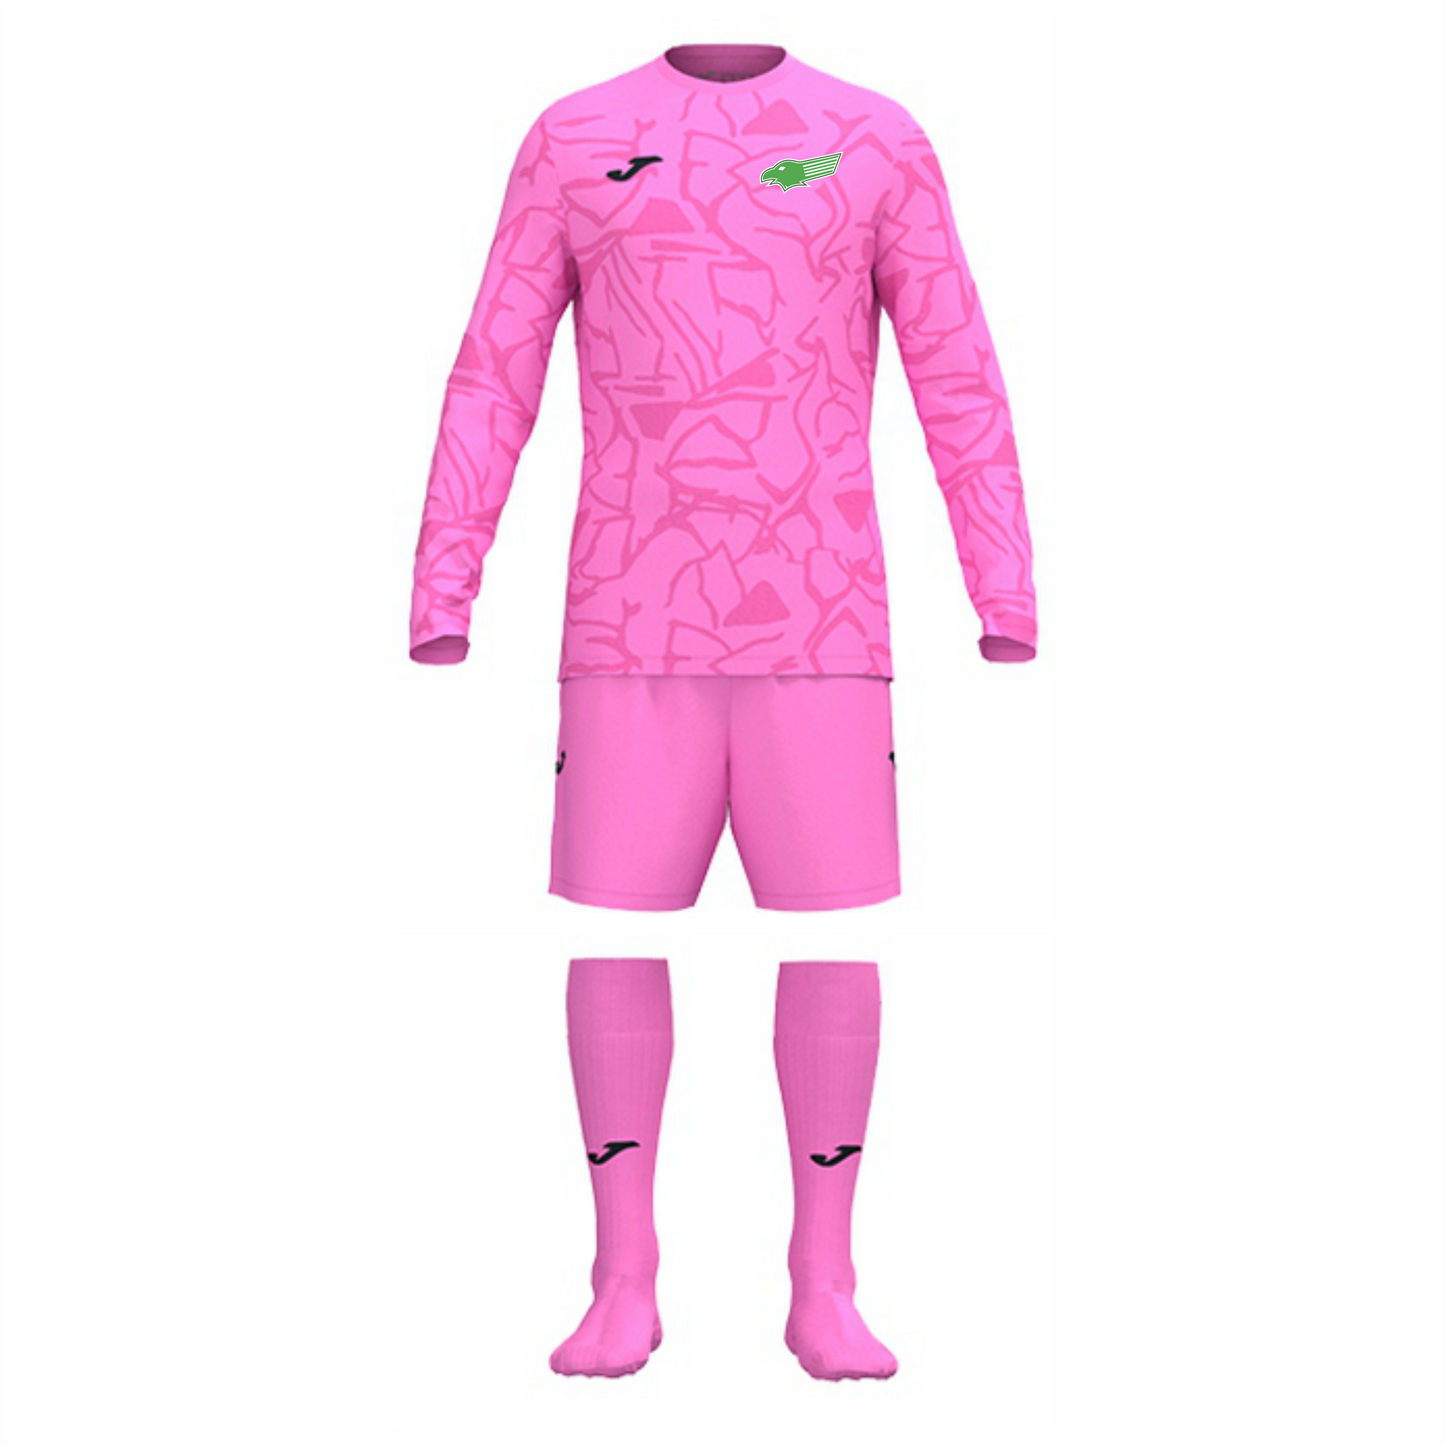 Kewford Eagles Goal Keeper Kit Pack - Pink